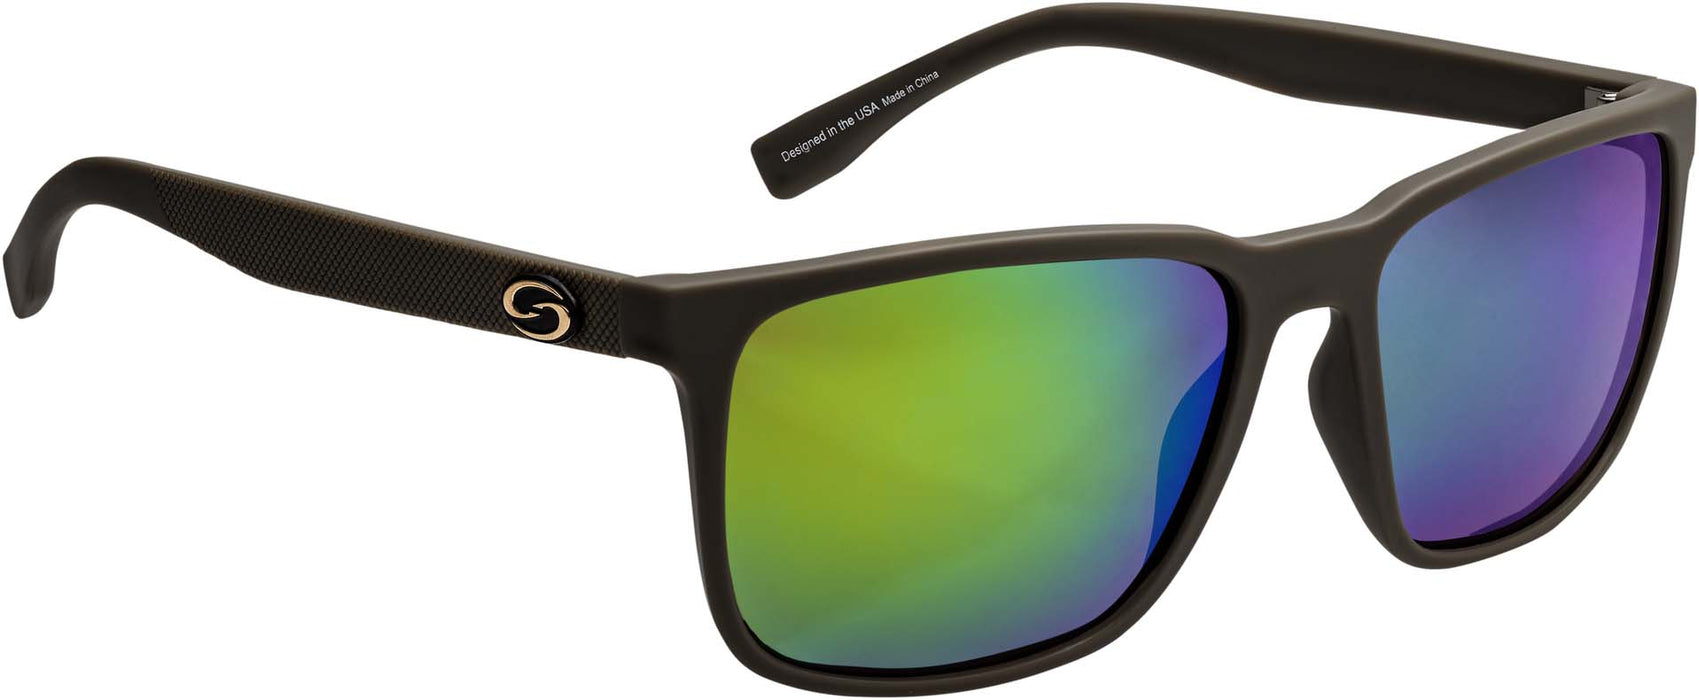 Strike King S11 Rogue Polarized Sunglasses